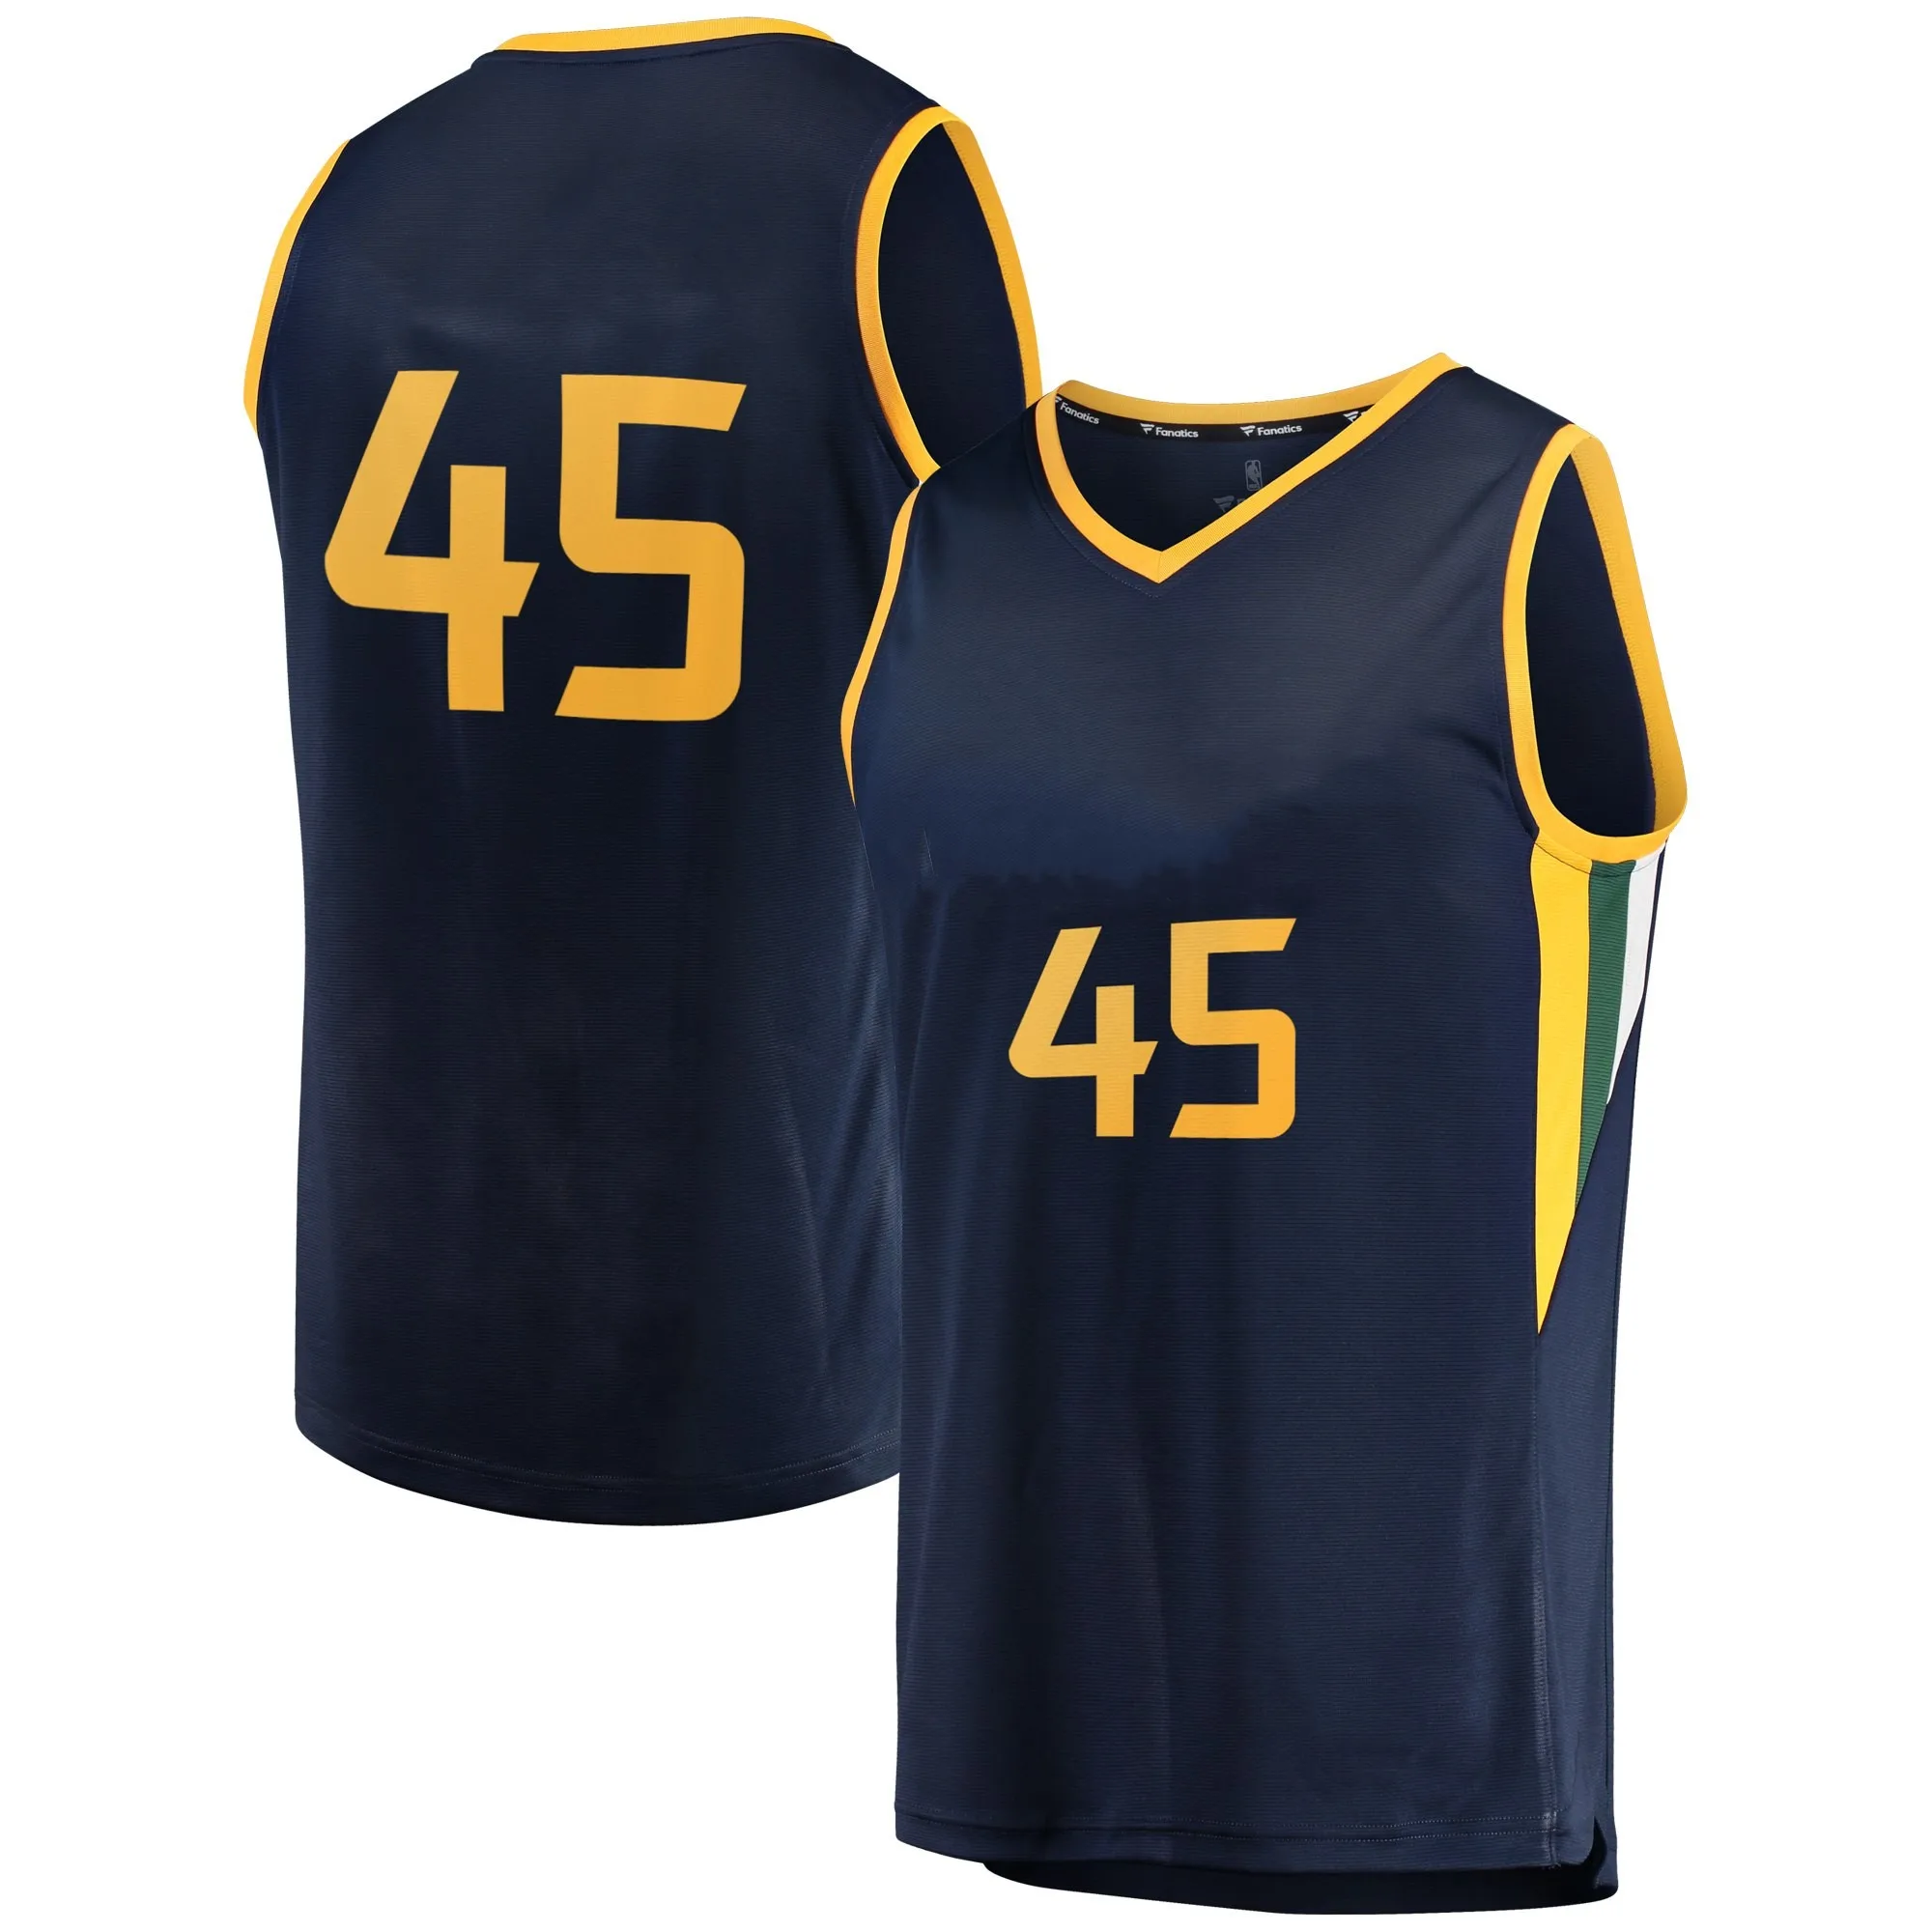 Blank Basketball Jersey Template  Basketball uniforms, Basketball